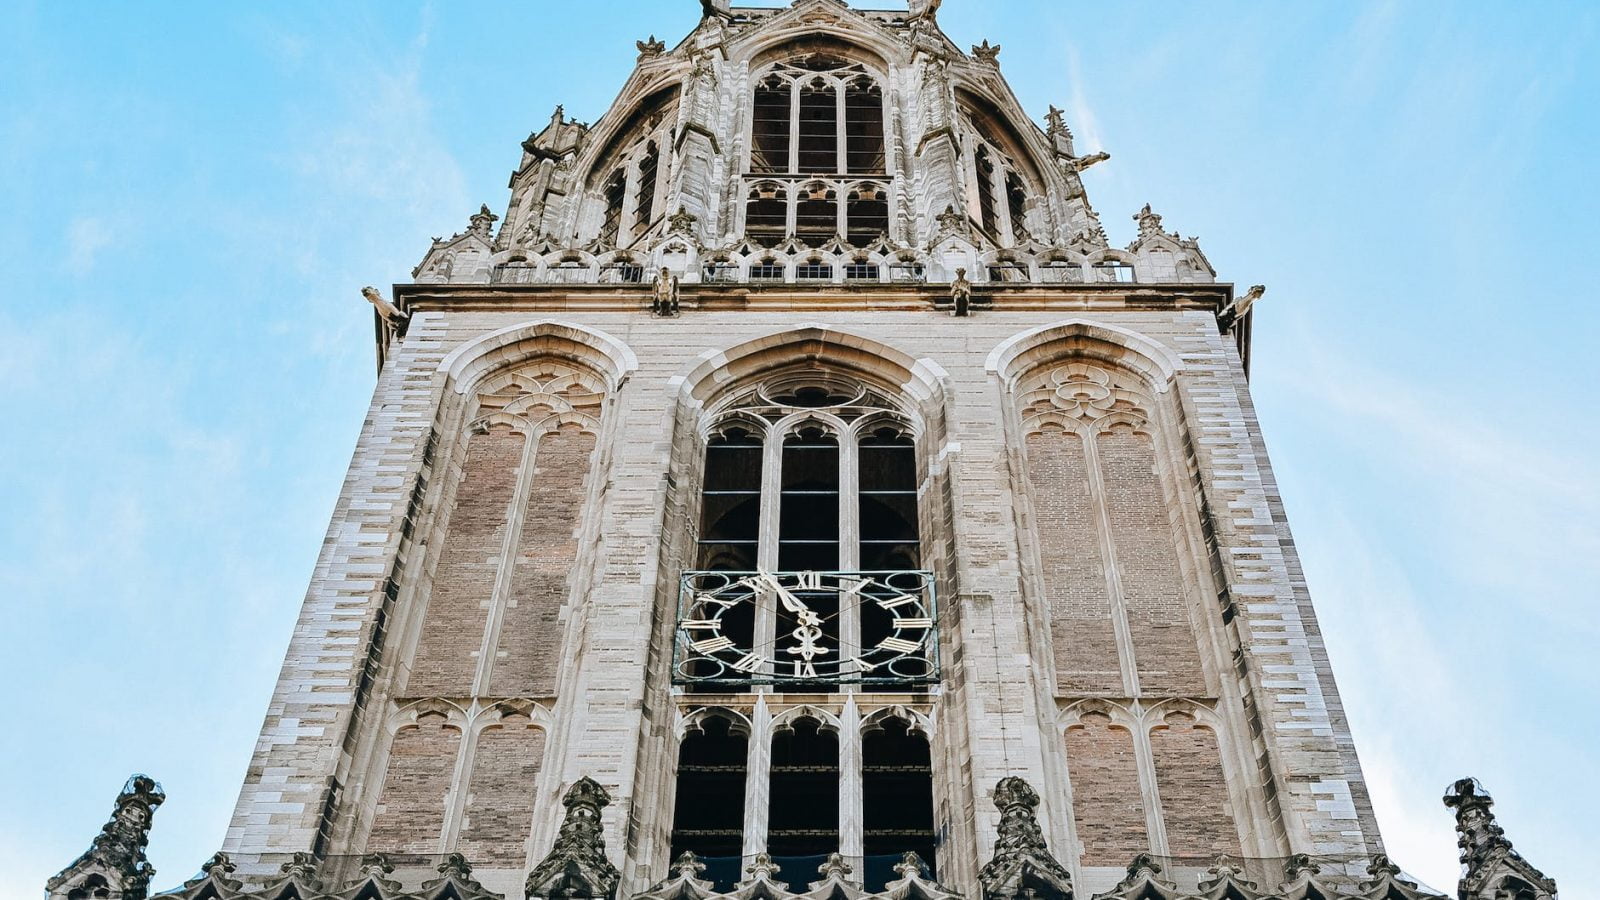 facade of medieval church tower